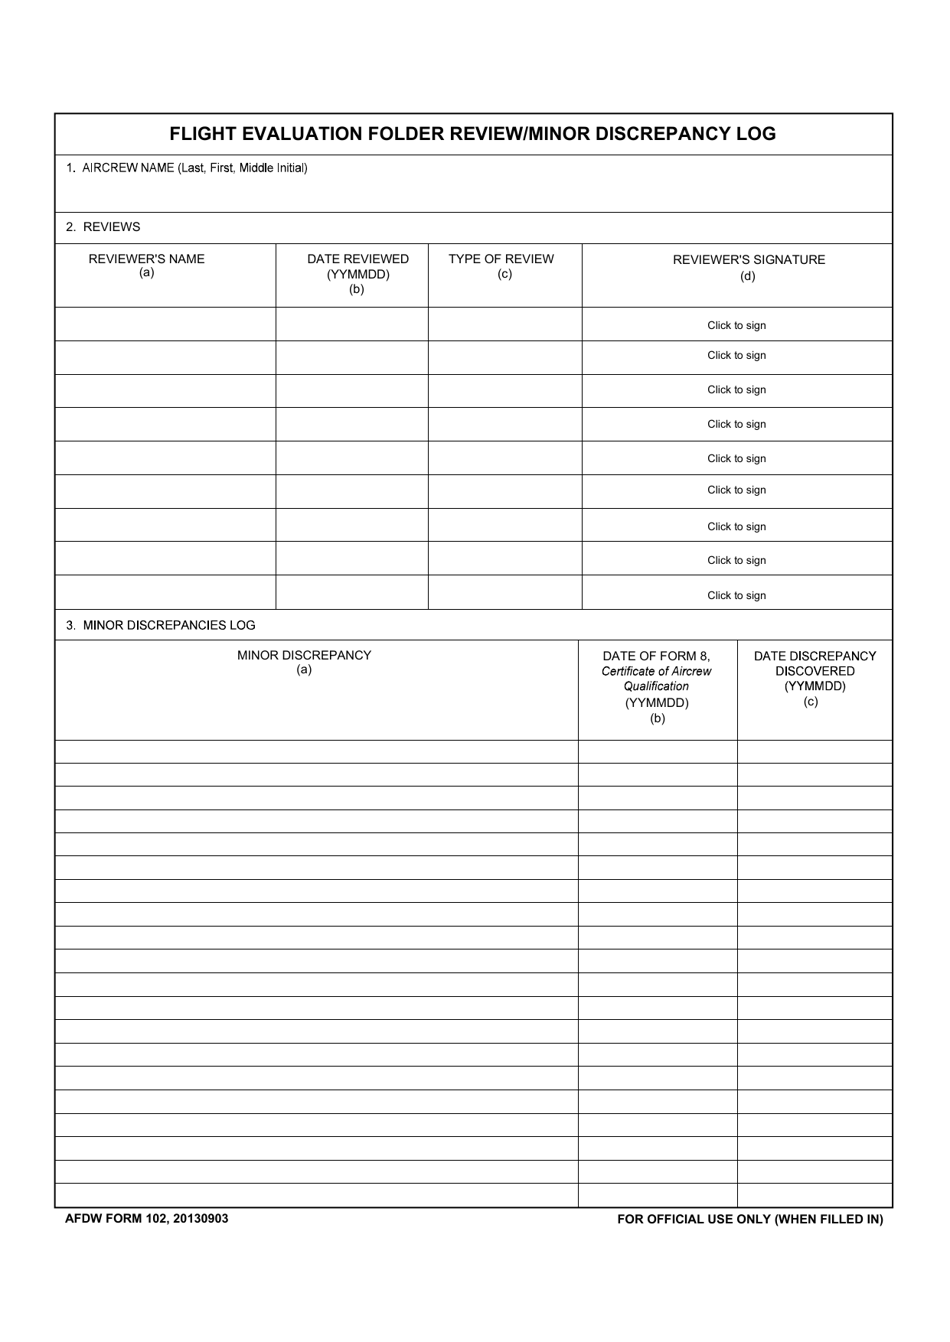 AFDW Form 102 Flight Evaluation Folder Review / Minor Discrepancy Log, Page 1